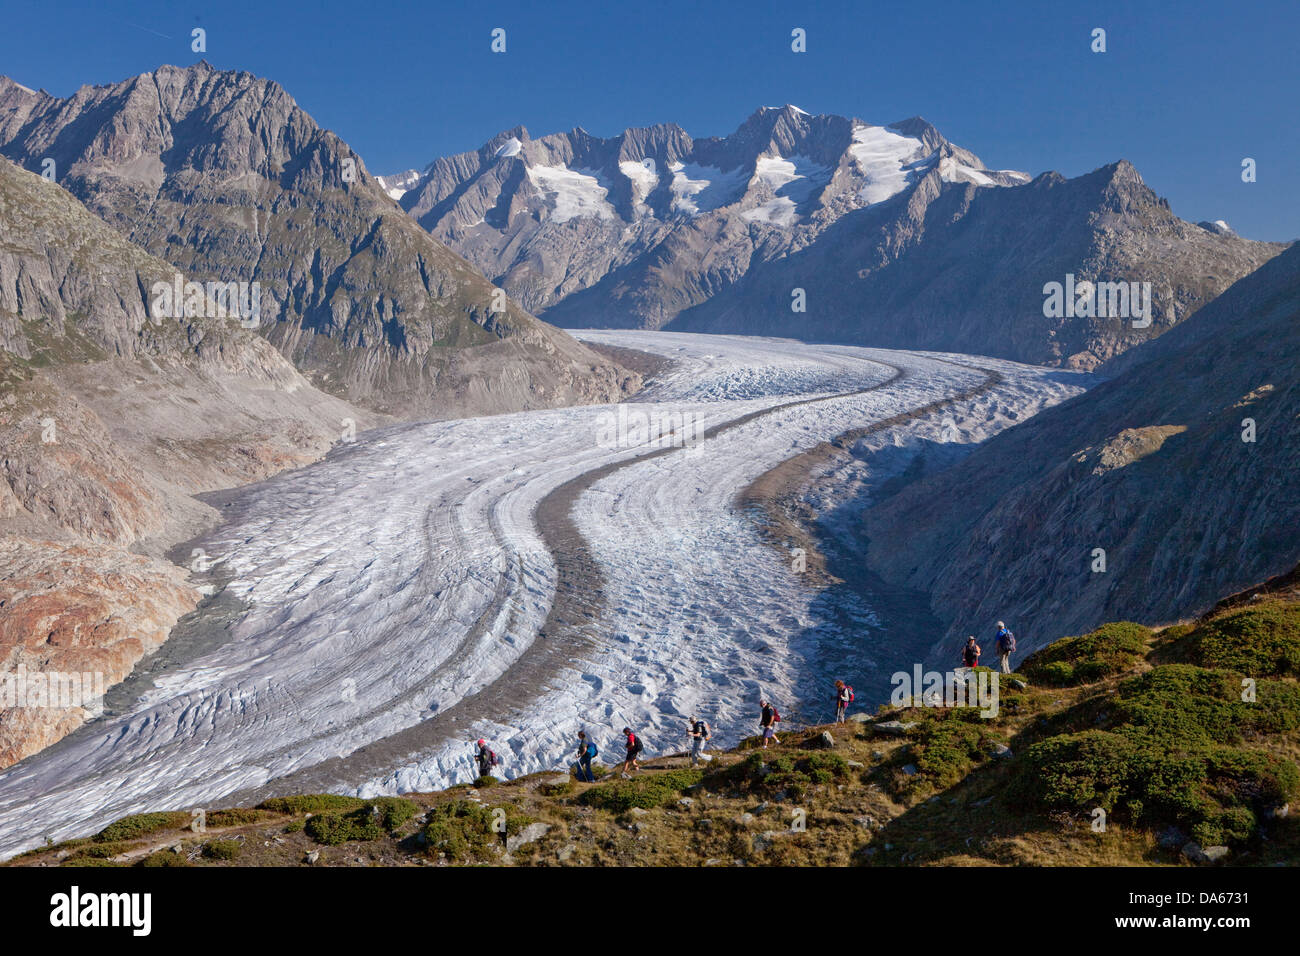 Tour, Aletsch, ghiacciaio, ghiaccio, ghiacciaio, ice, Moraine, canton Vallese, passeggiate, escursioni, trekking, Svizzera, Europa, gruppo, glaci Foto Stock